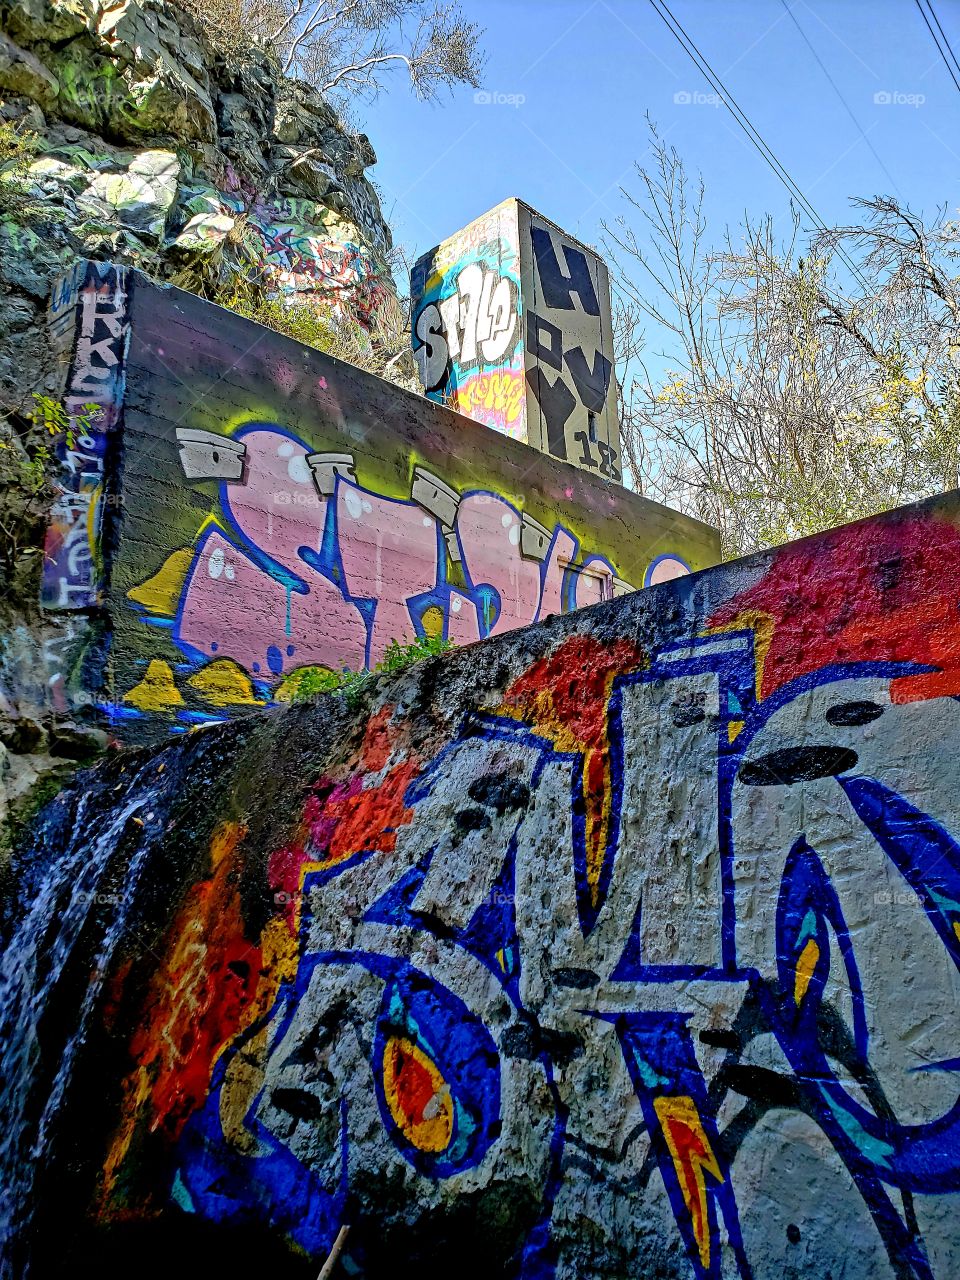 Graffiti near Cajon Pass in Southern California